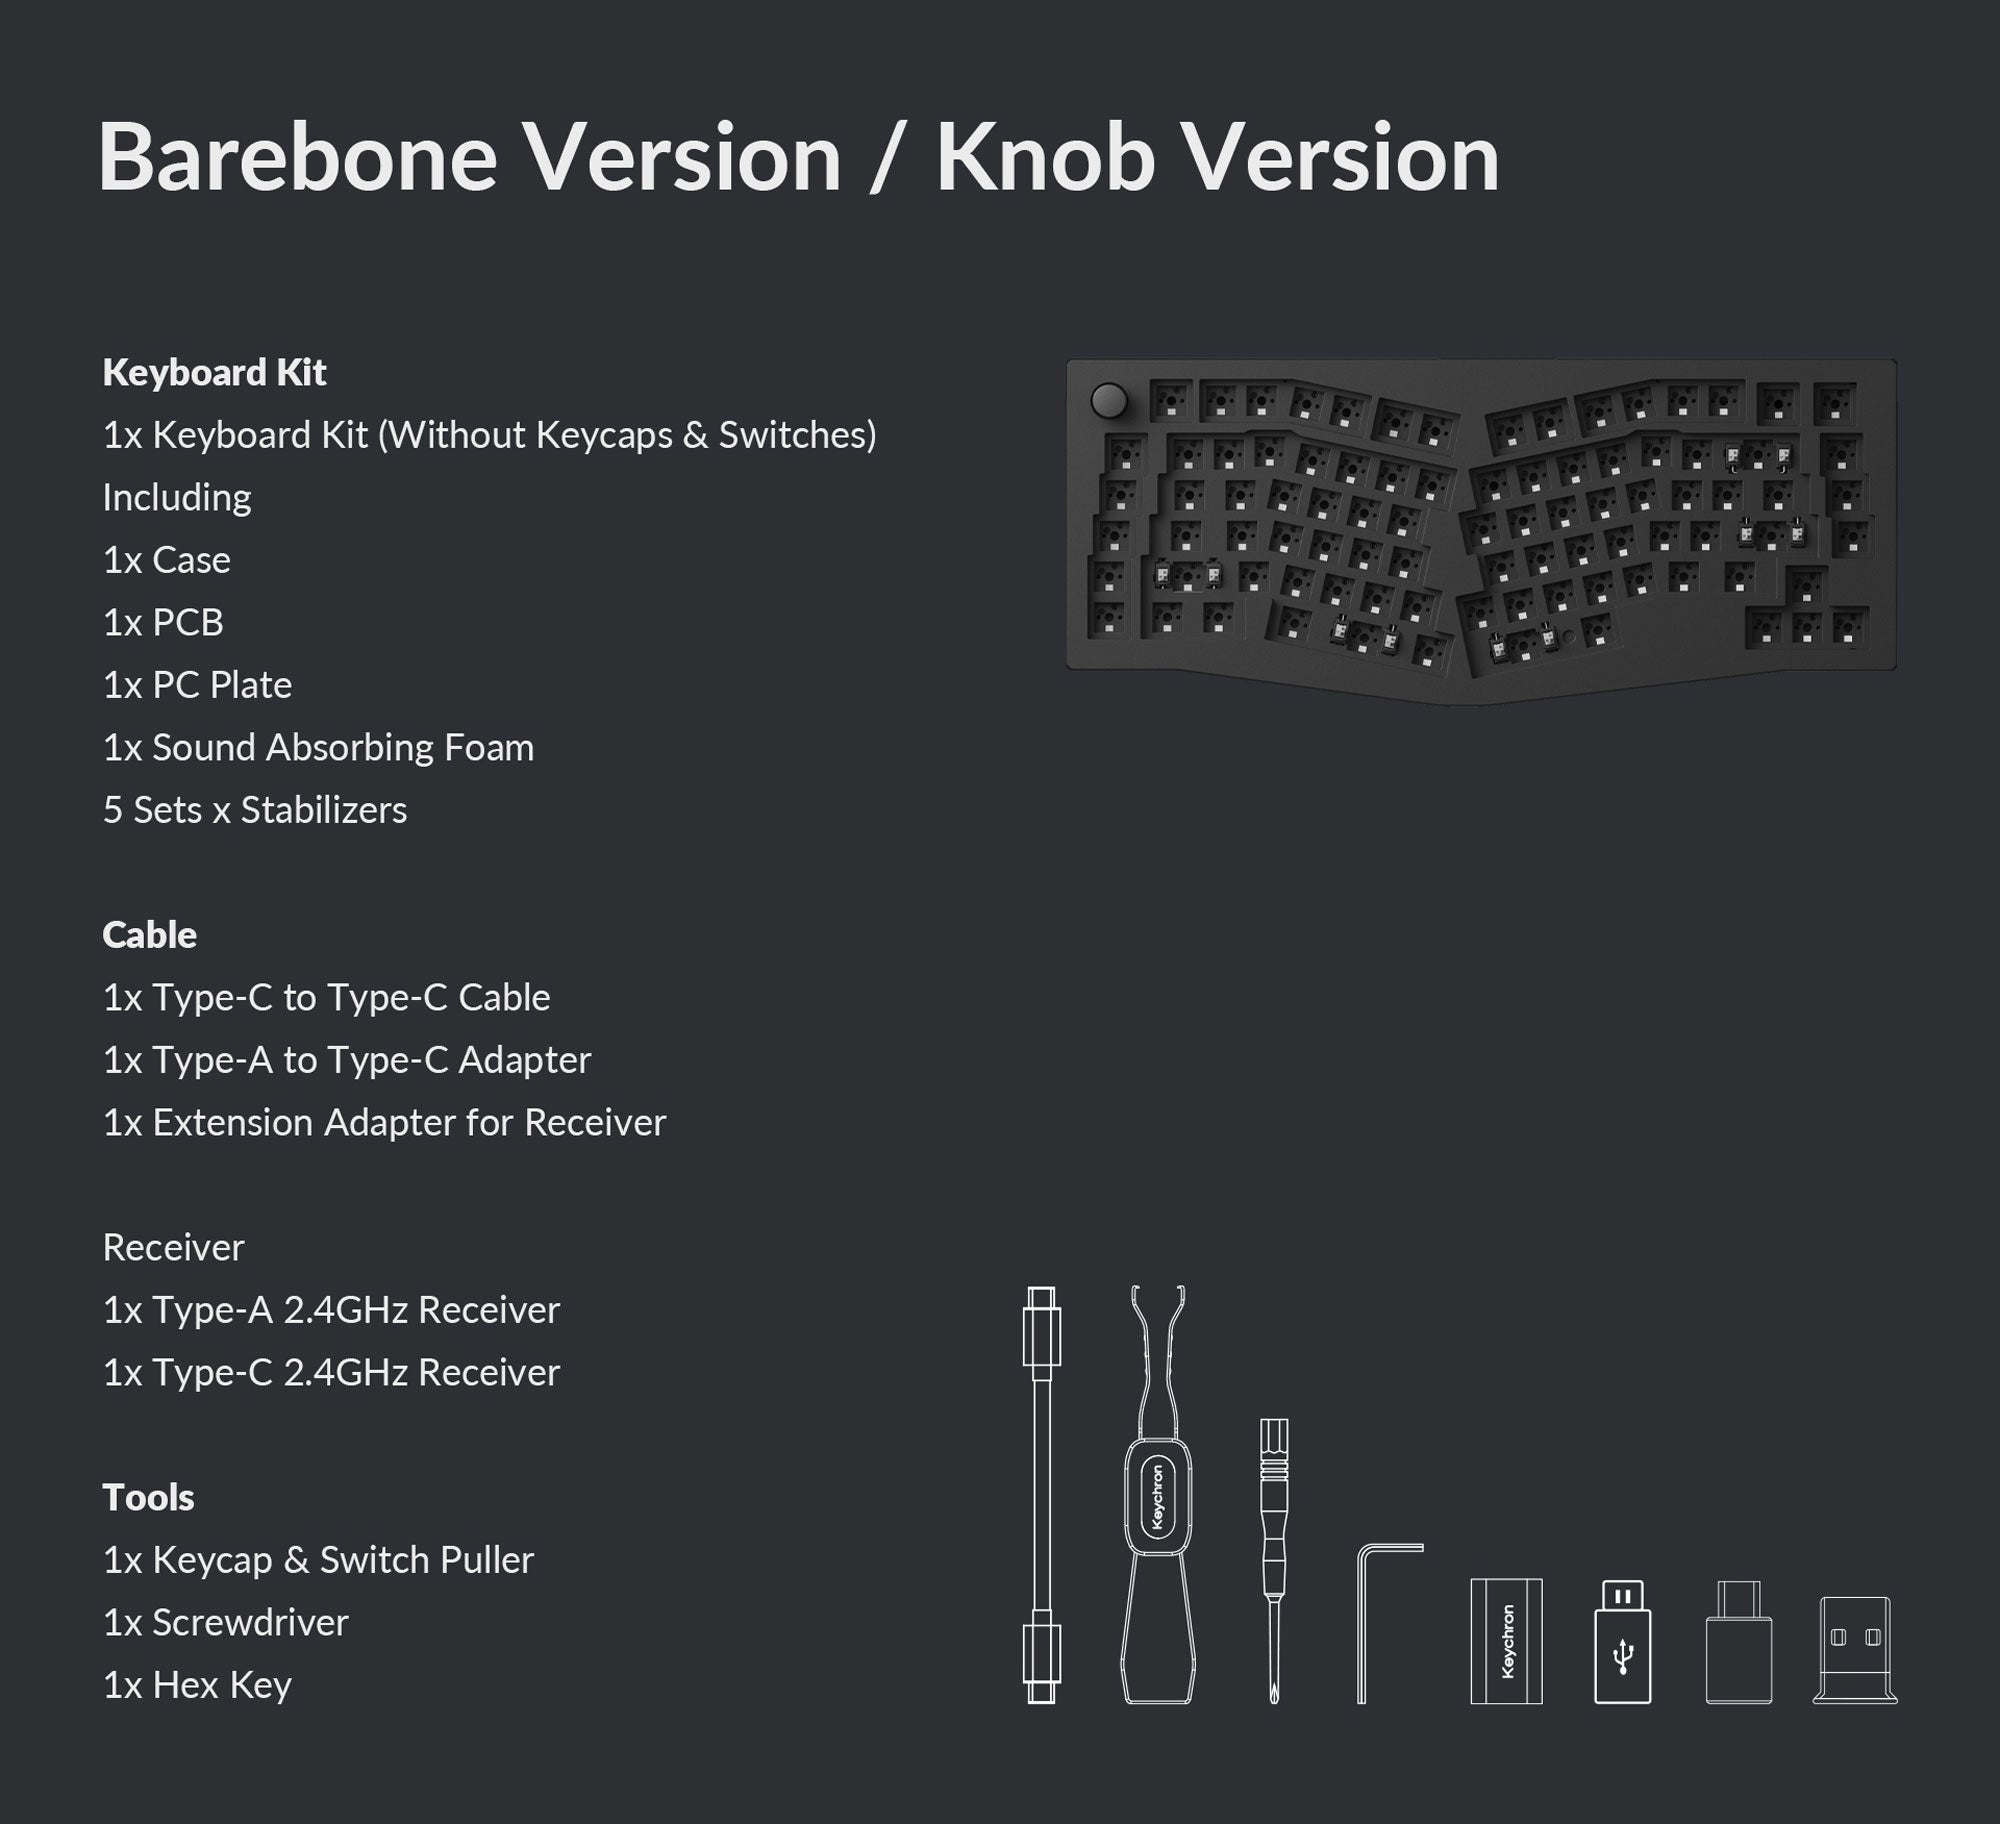 Packing list for V10 max barebone knob version